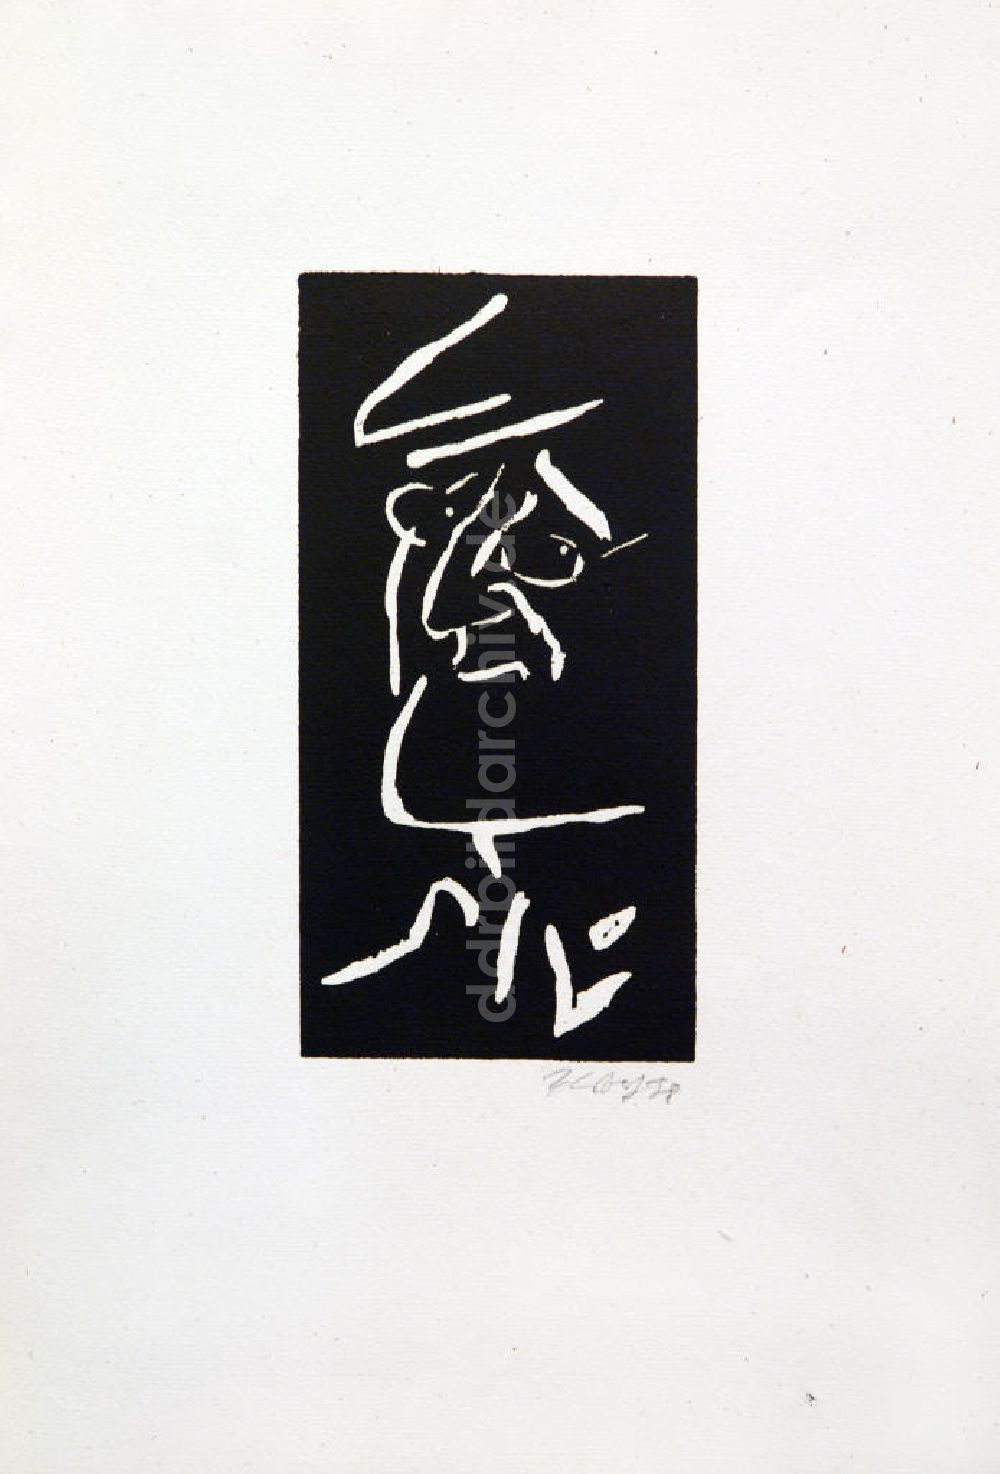 DDR-Bildarchiv: Berlin - Grafik von Herbert Sandberg über Bertolt Brecht 1978